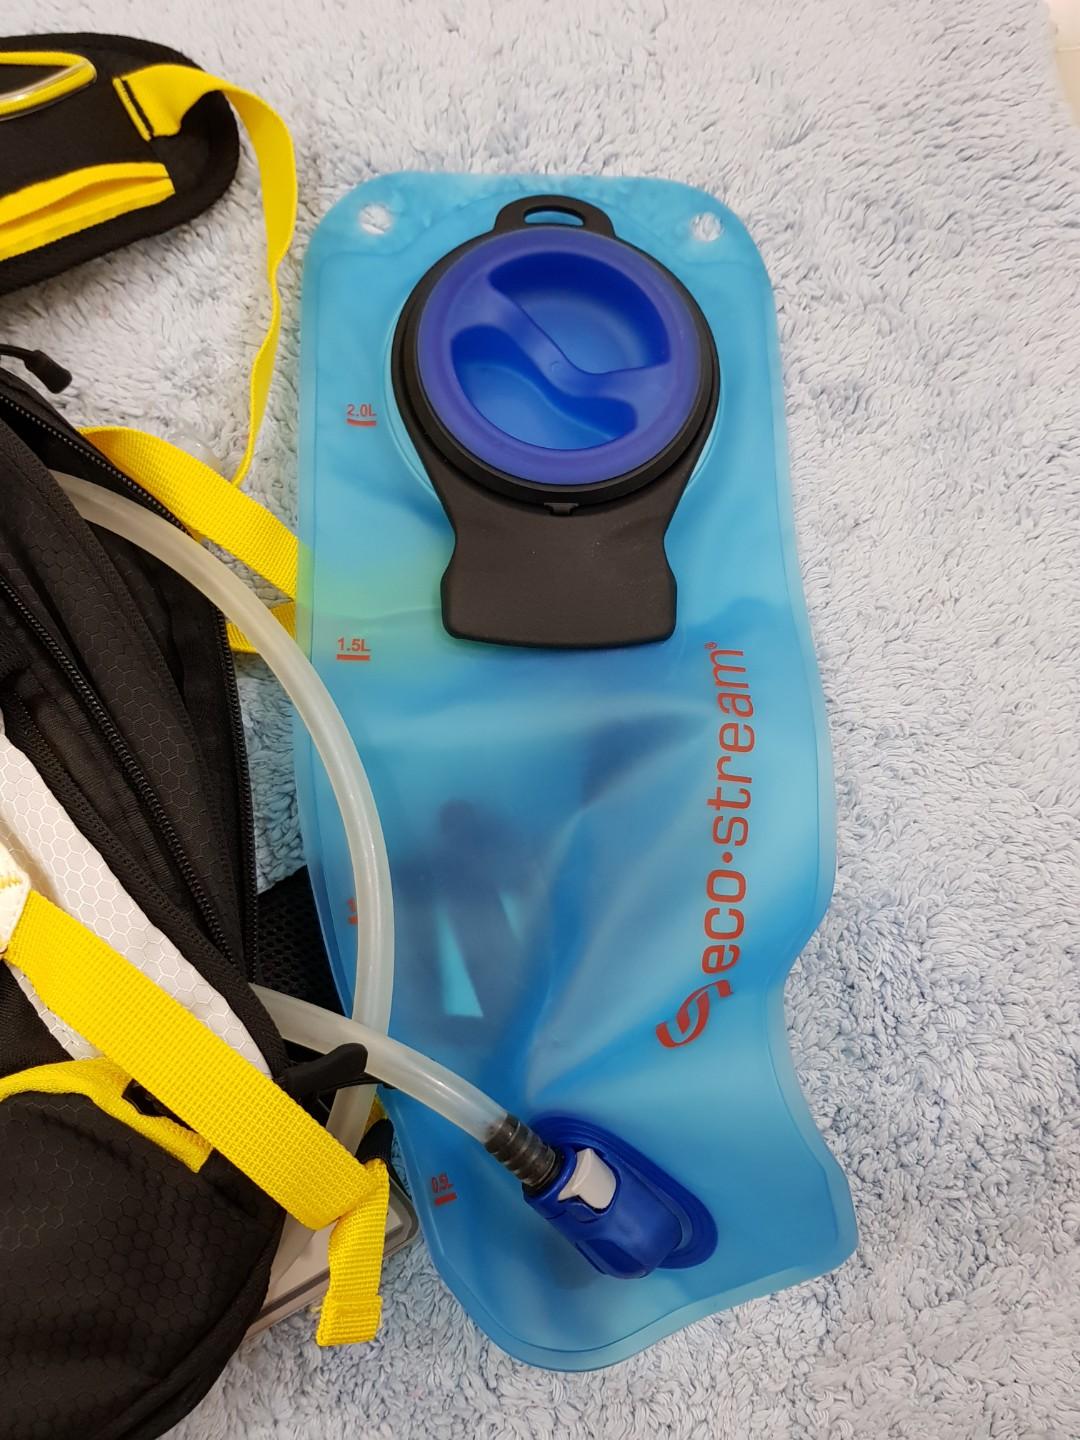 reebok hydration backpack